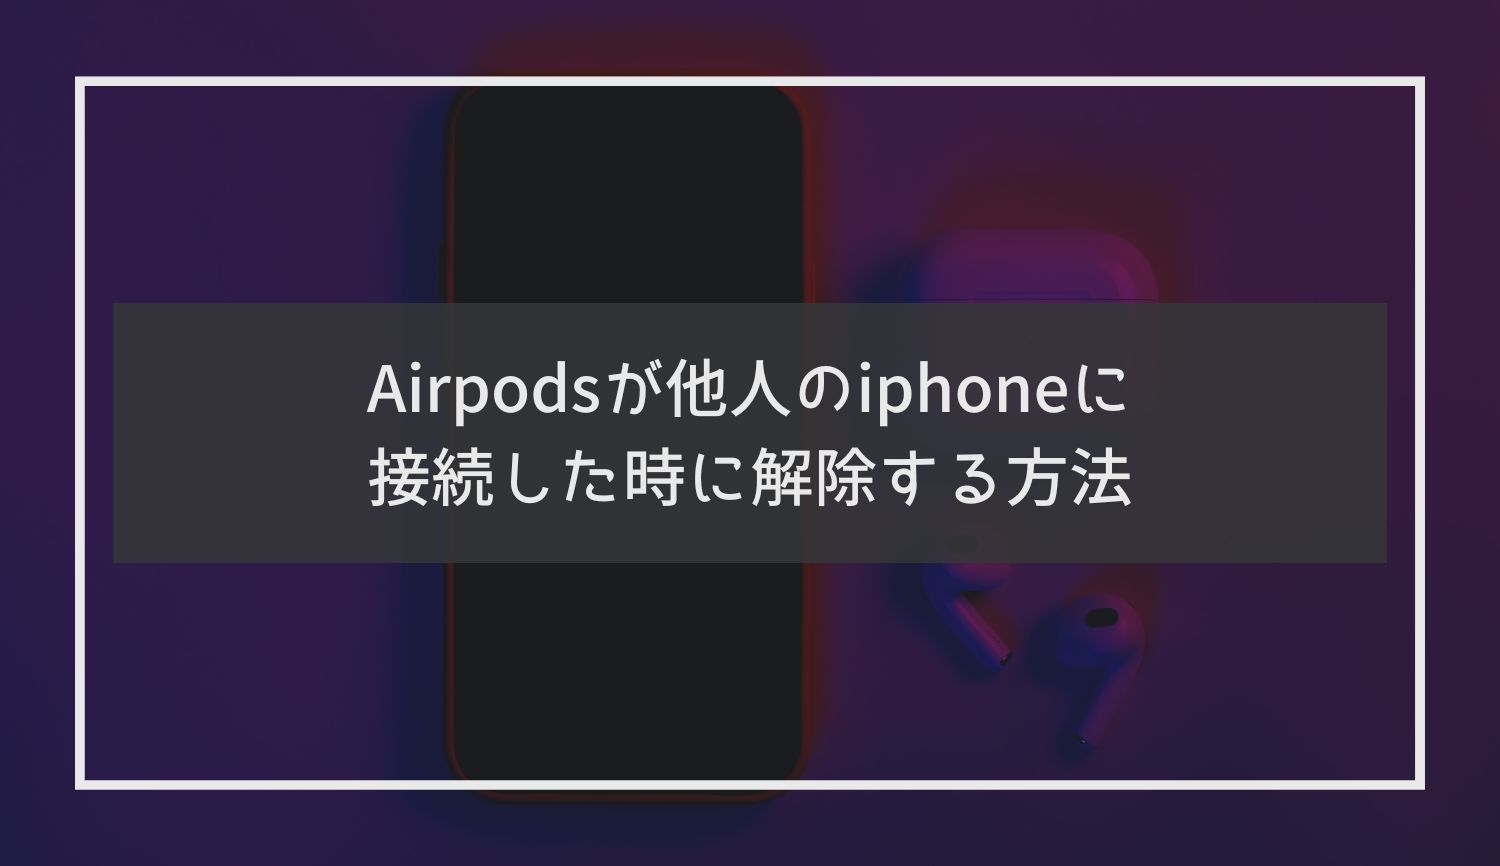 Airpodsが他人のiphoneに接続した時に解除する方法